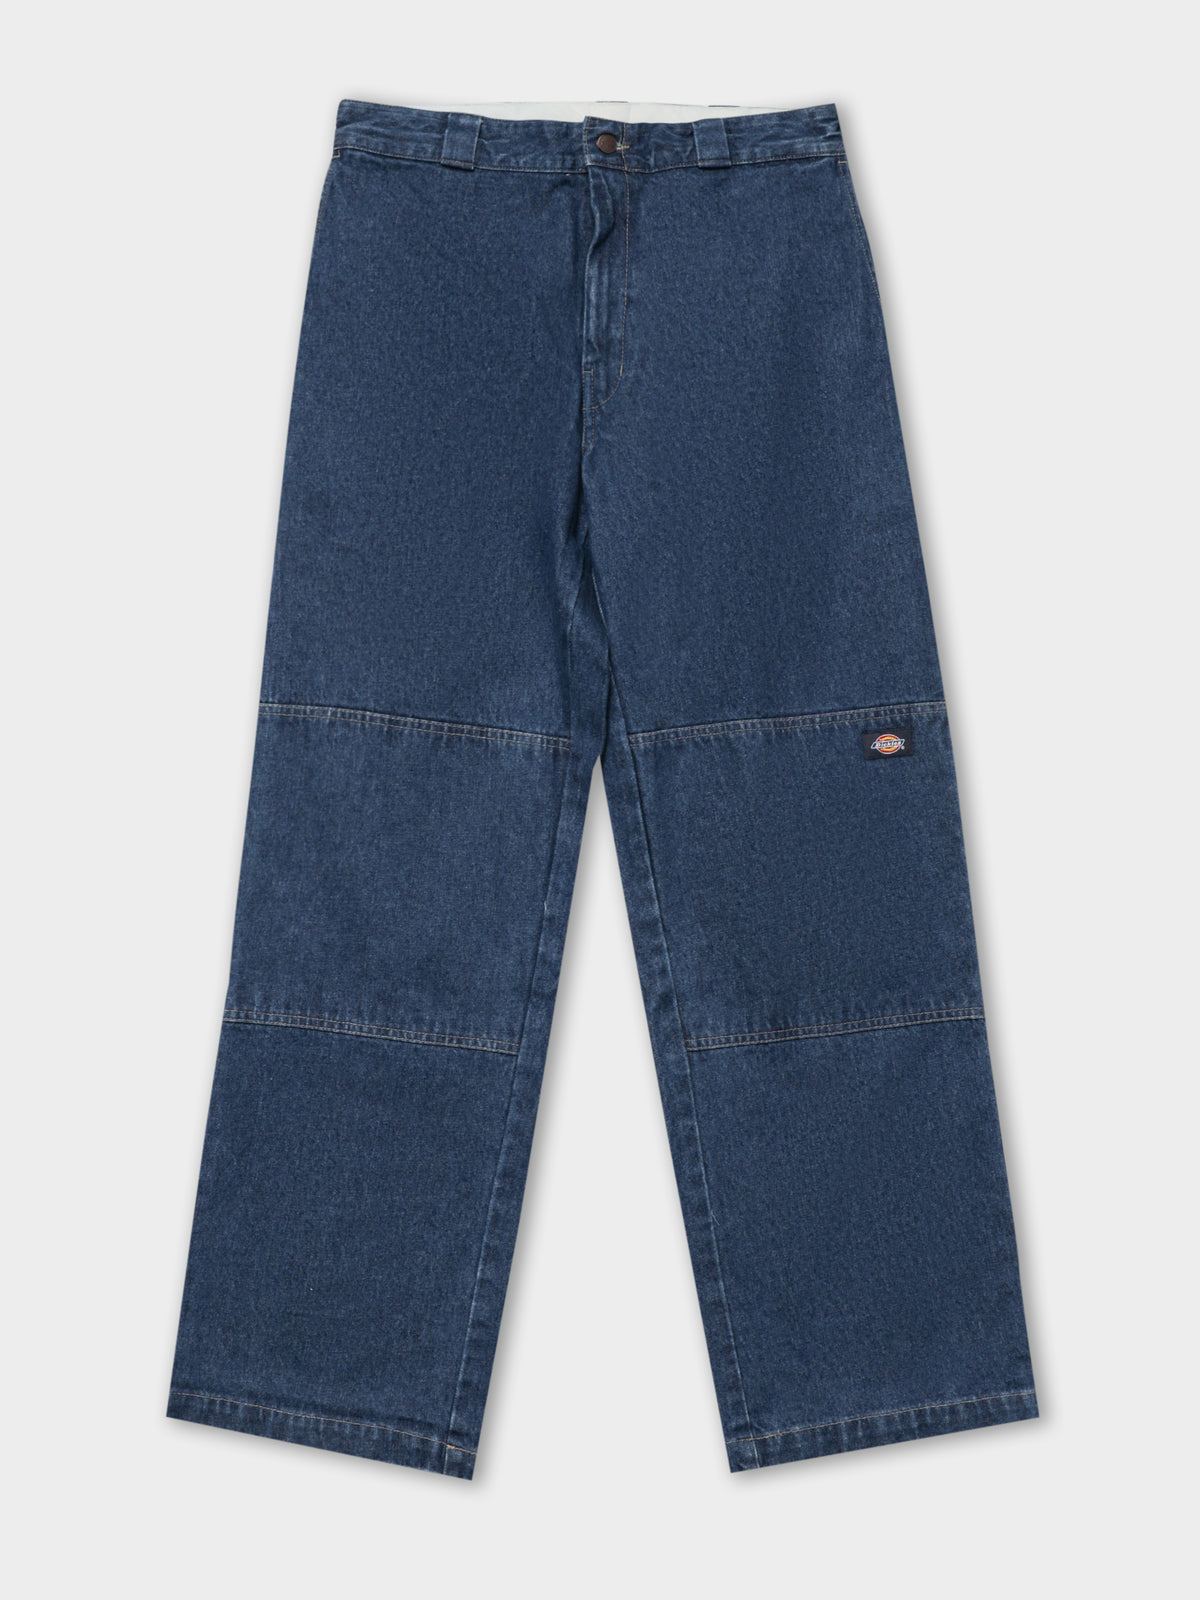 85-283AU Double Knee Jeans in Stone Washed Indigo Blue